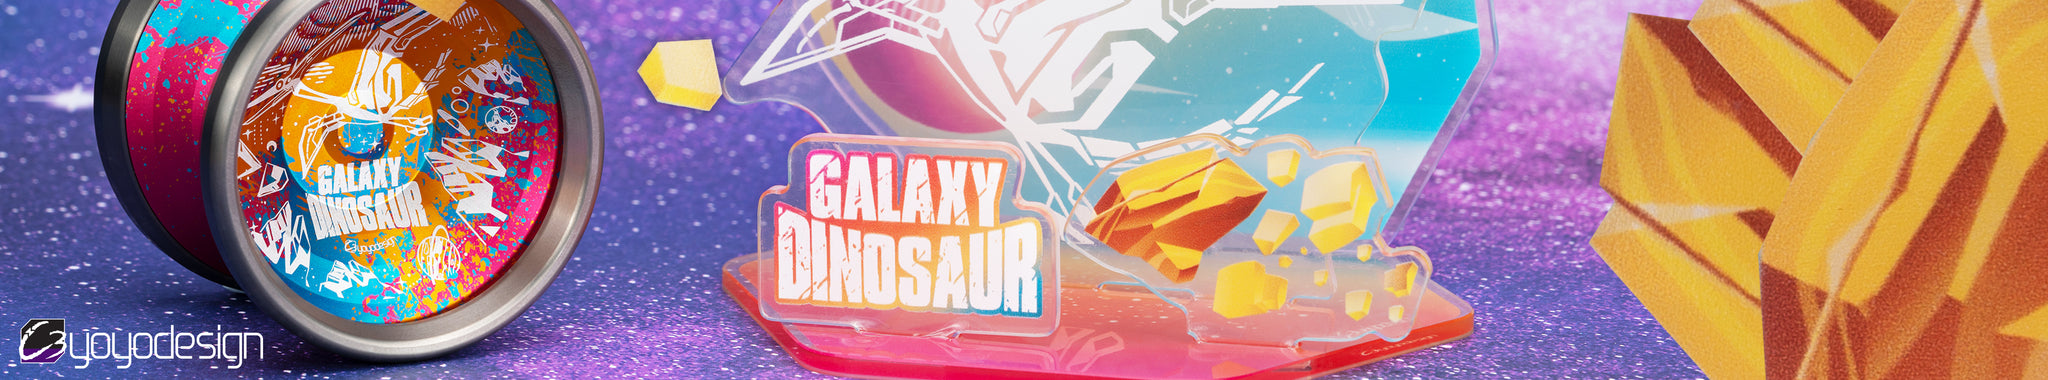 Galaxy Dinosaur by C3yoyodesign